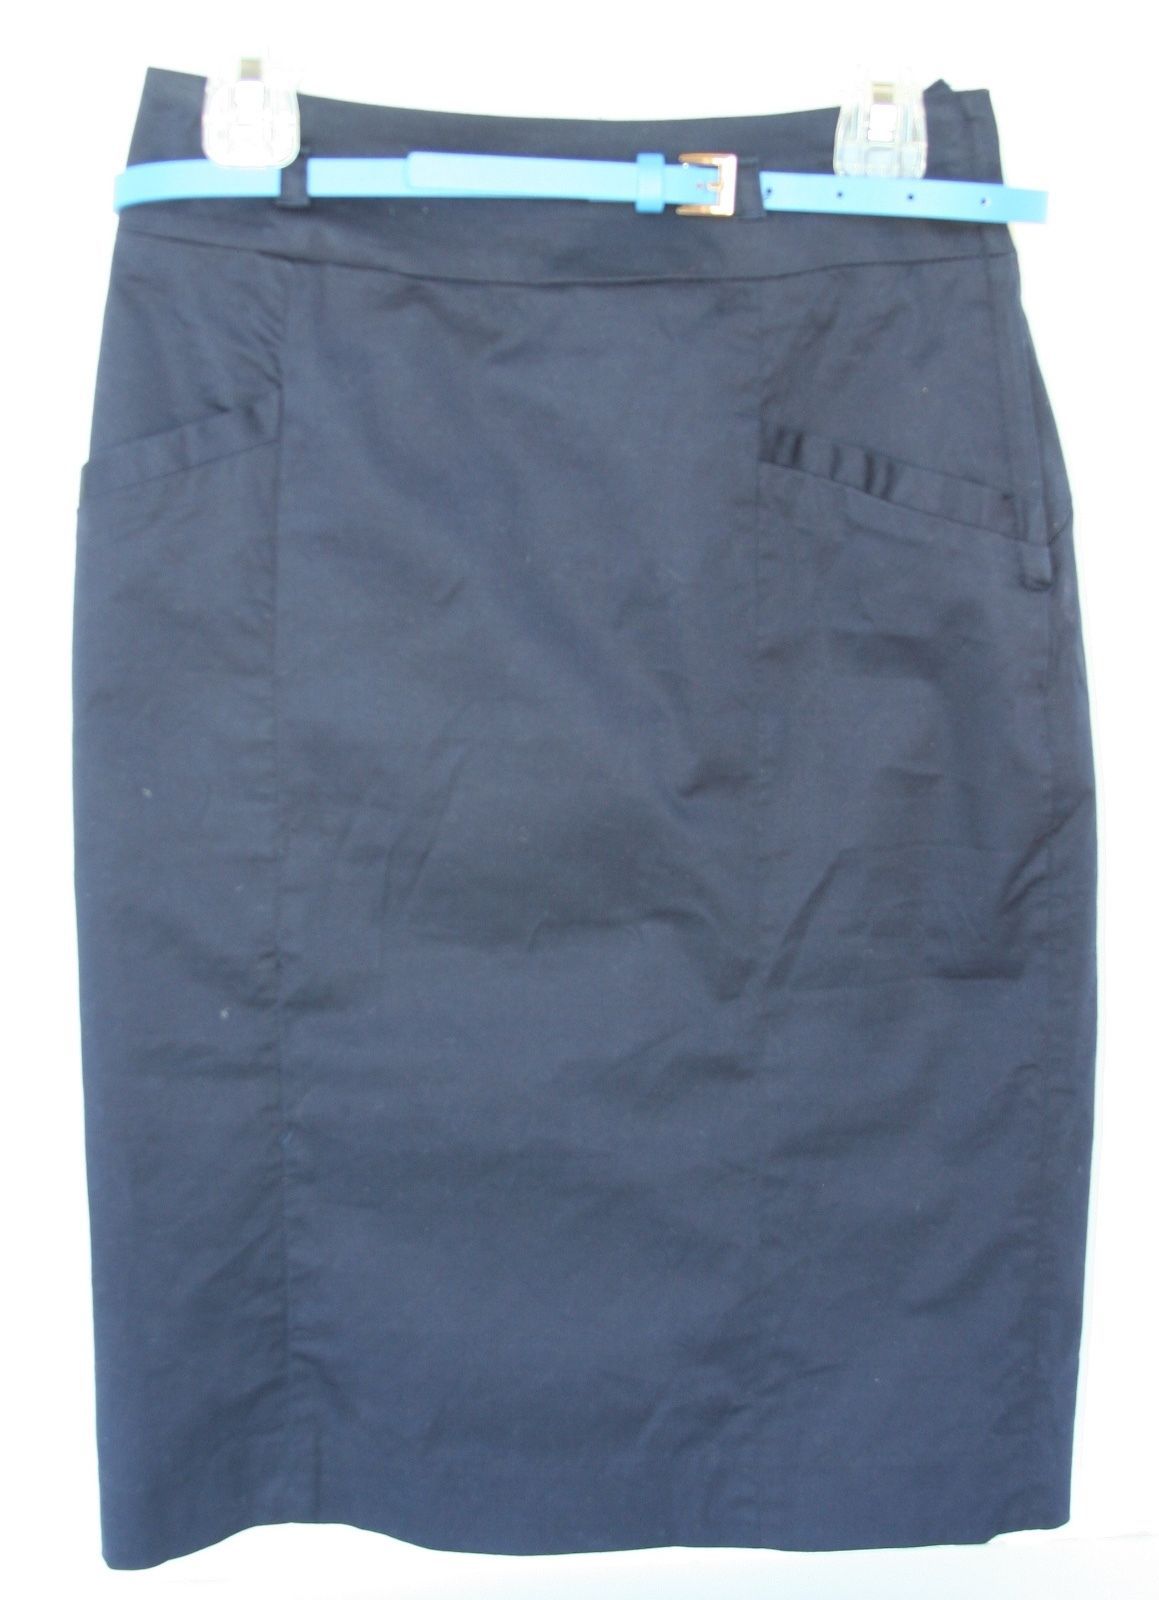 Primary image for H&M Navy Blue Skirt EUC Womens Size 2 Europe size 32 lighter blue skinny belt